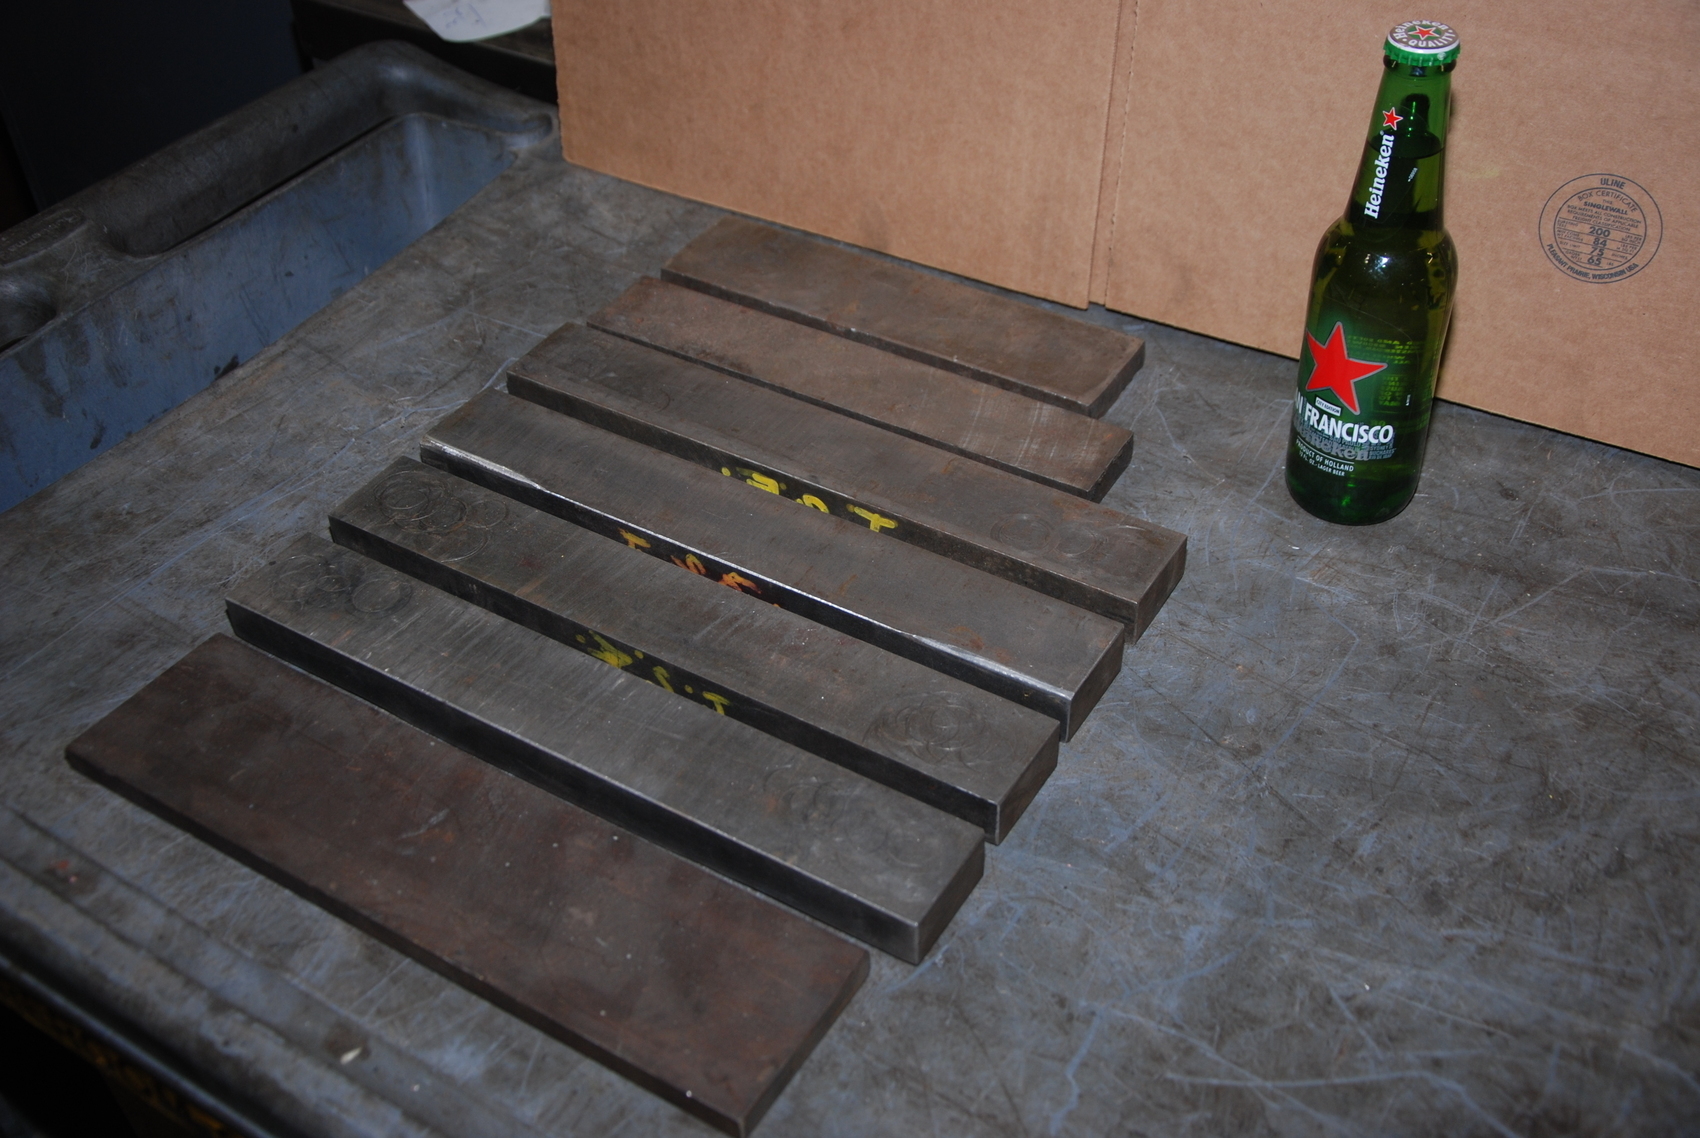 Lot of 7 steel Rectangular Bar for blacksmith anvil,46 lbs